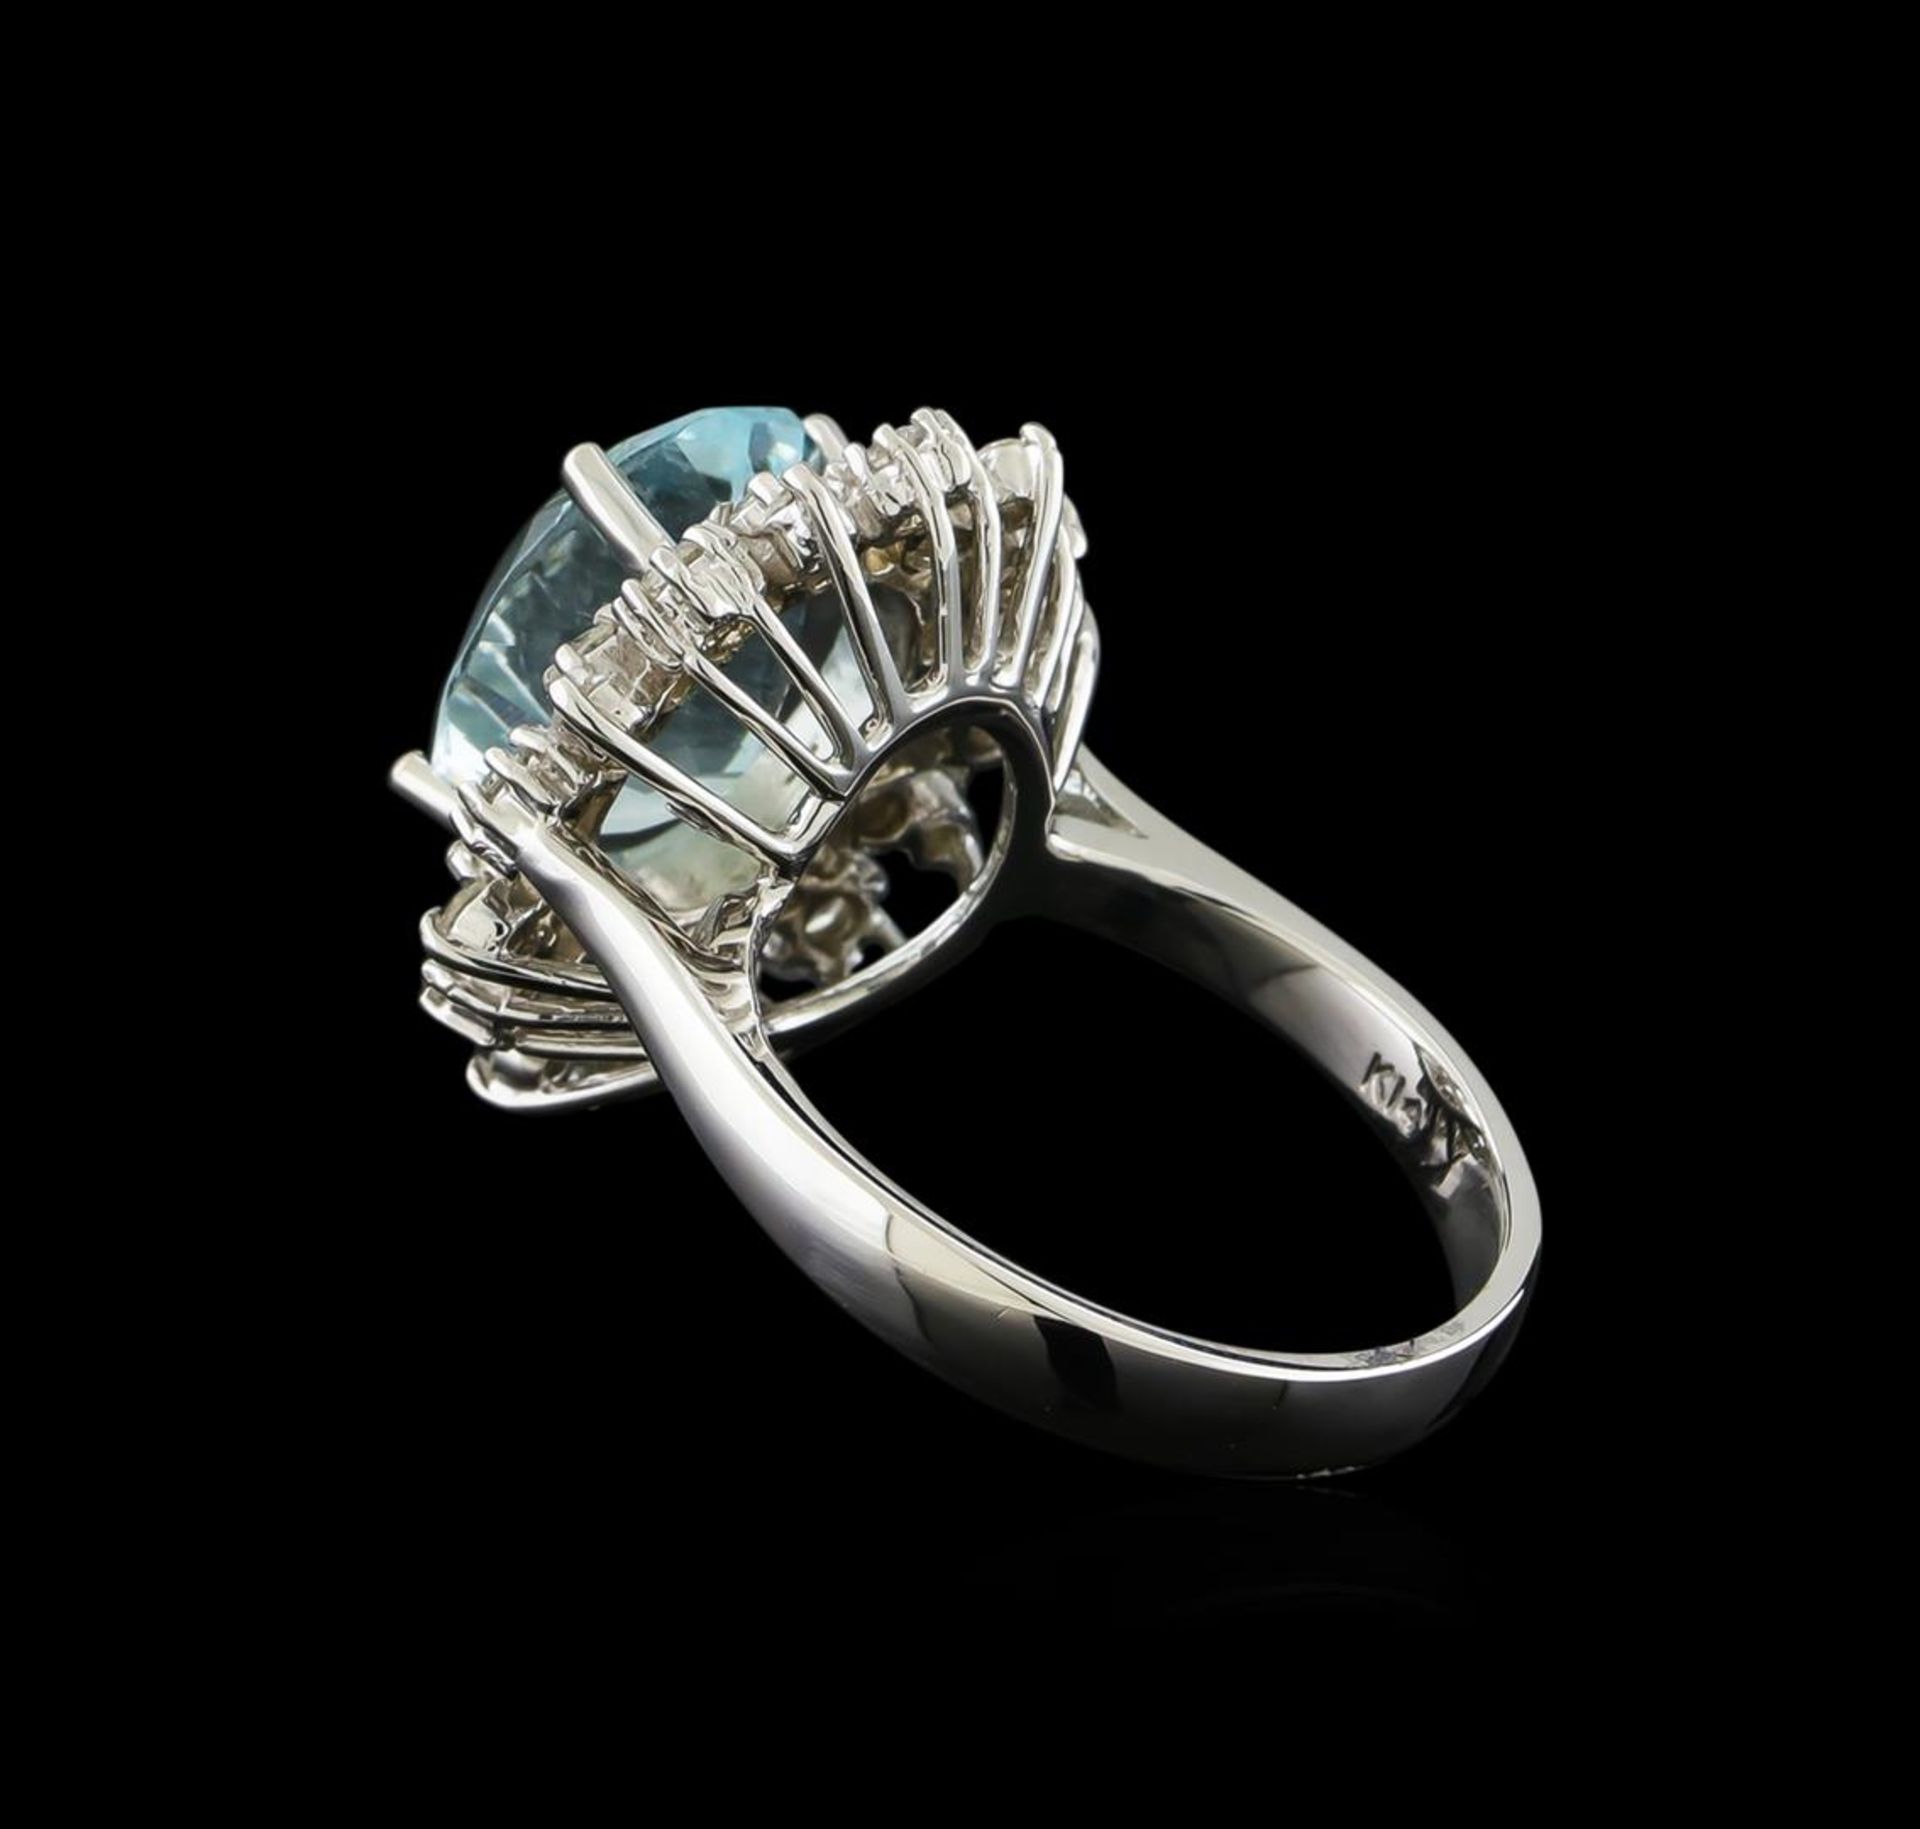 4.3 ctw Aquamarine and Diamond Ring - 14KT White Gold - Image 3 of 4